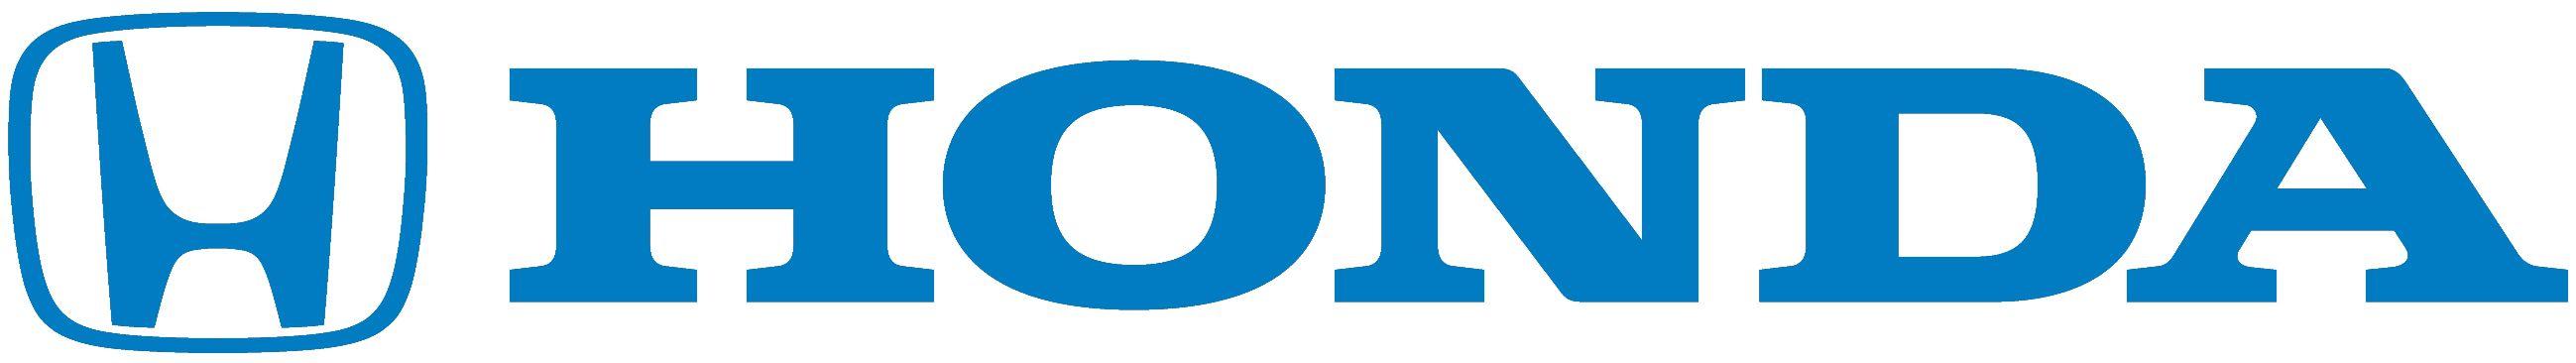 Blue Honda Logo - Image - Blue Honda Logo.jpg | Honda Wiki | FANDOM powered by Wikia